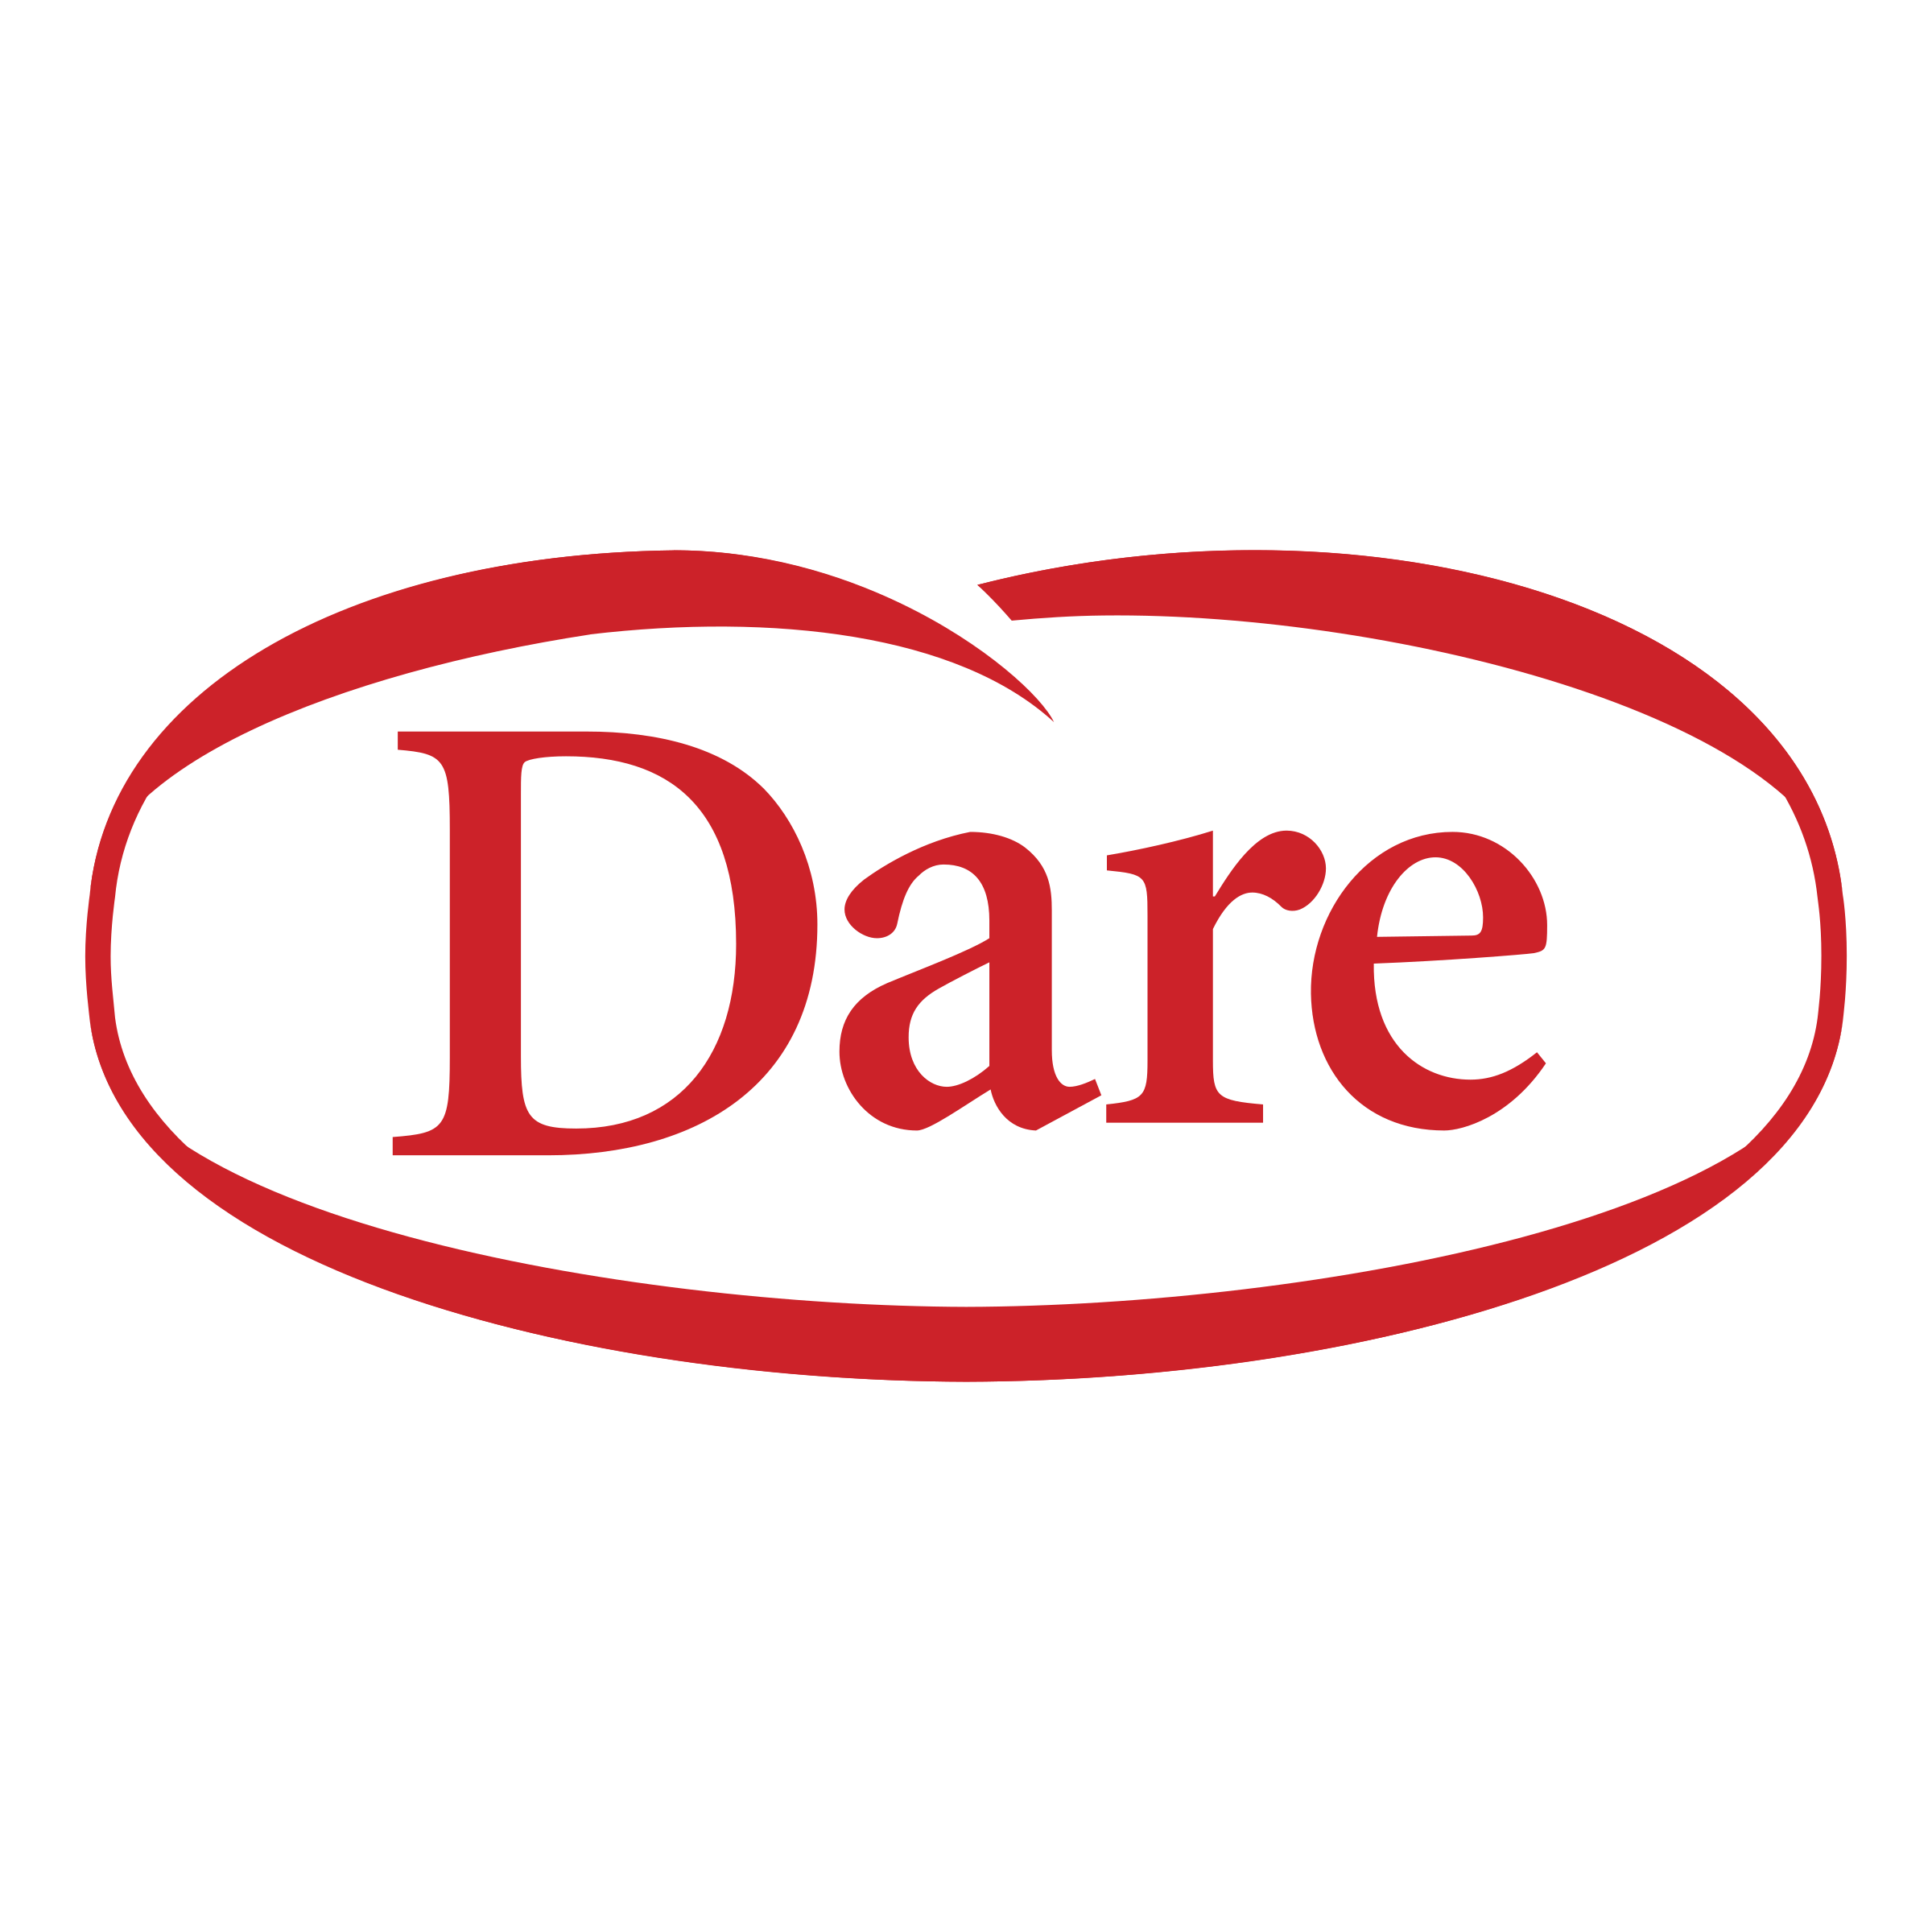 D.A.r.e Logo - Dare Logo PNG Transparent & SVG Vector